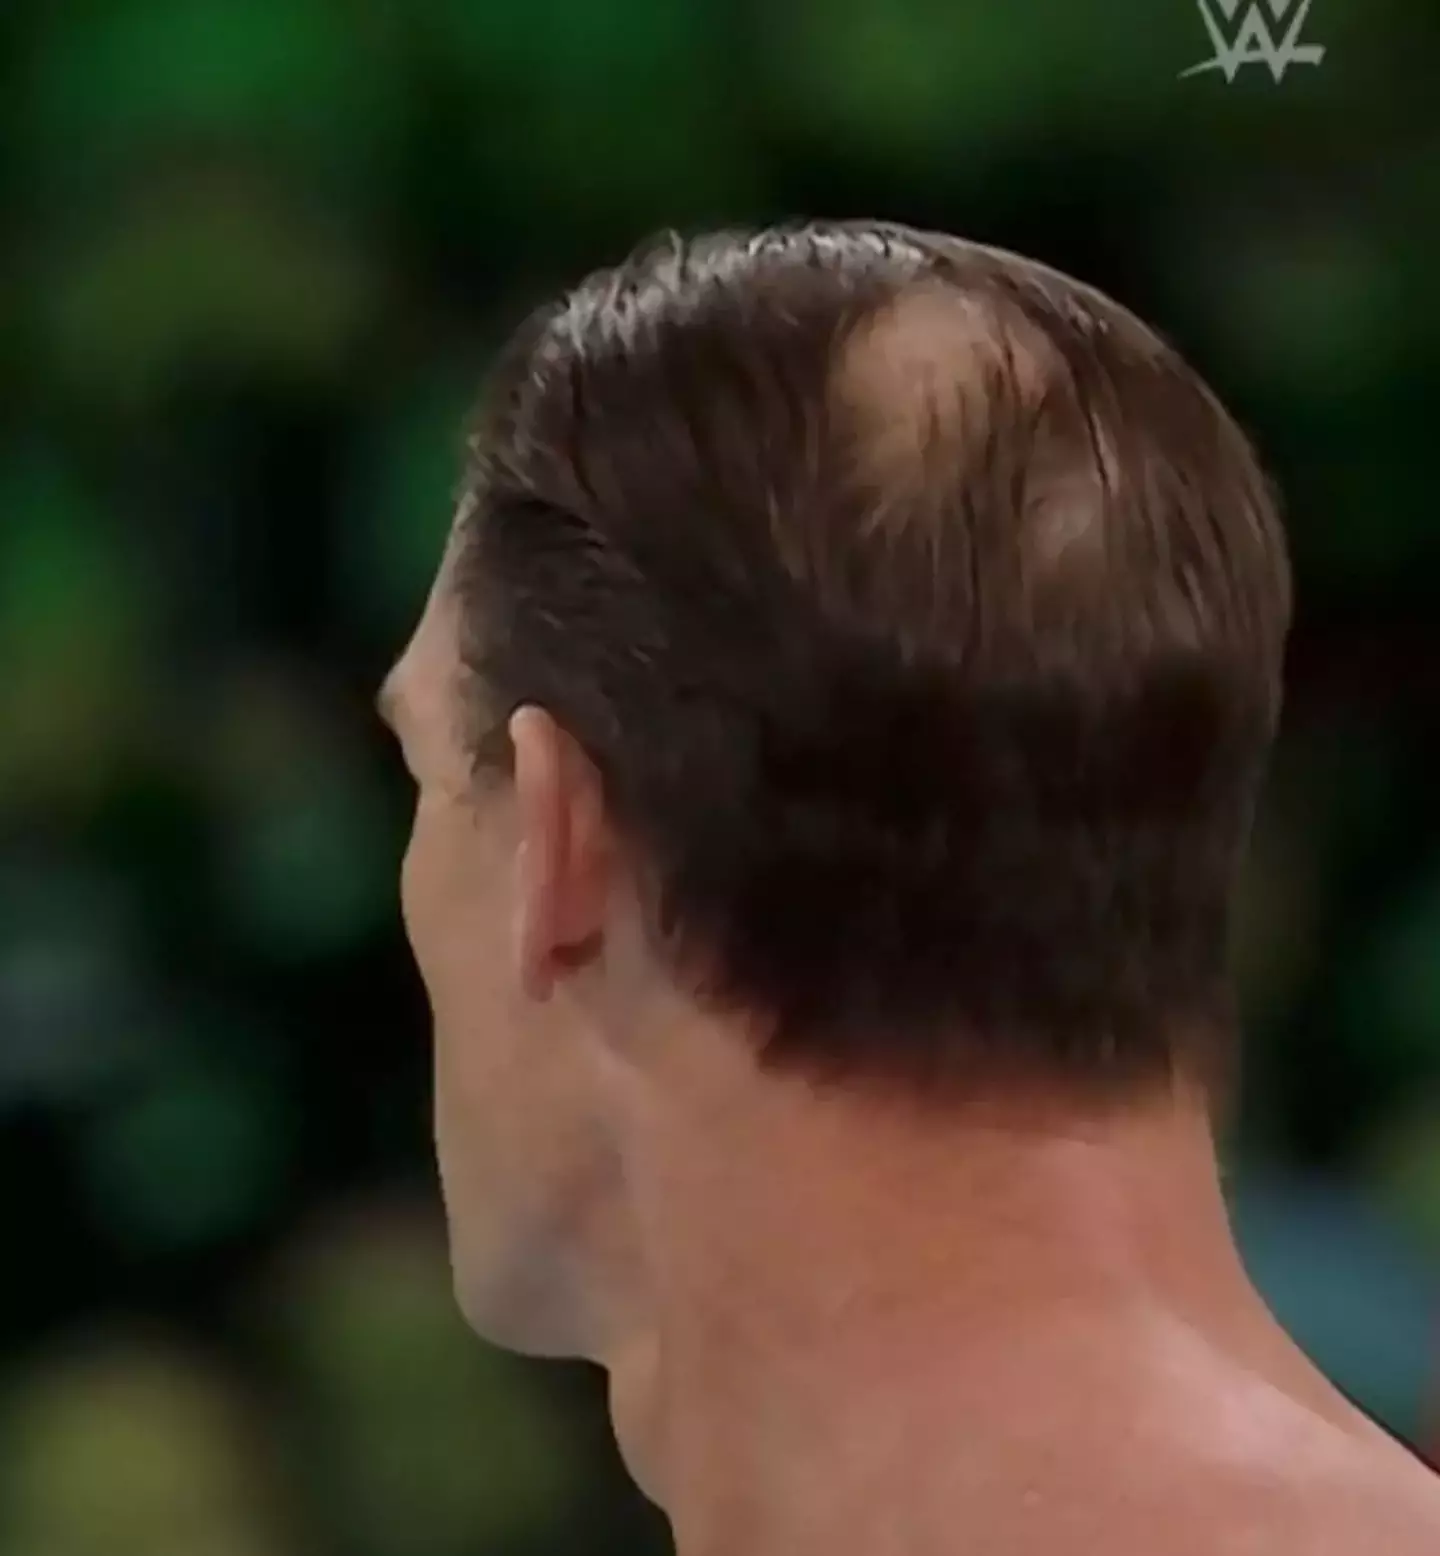 John Cena at Wrestlemania. WWE